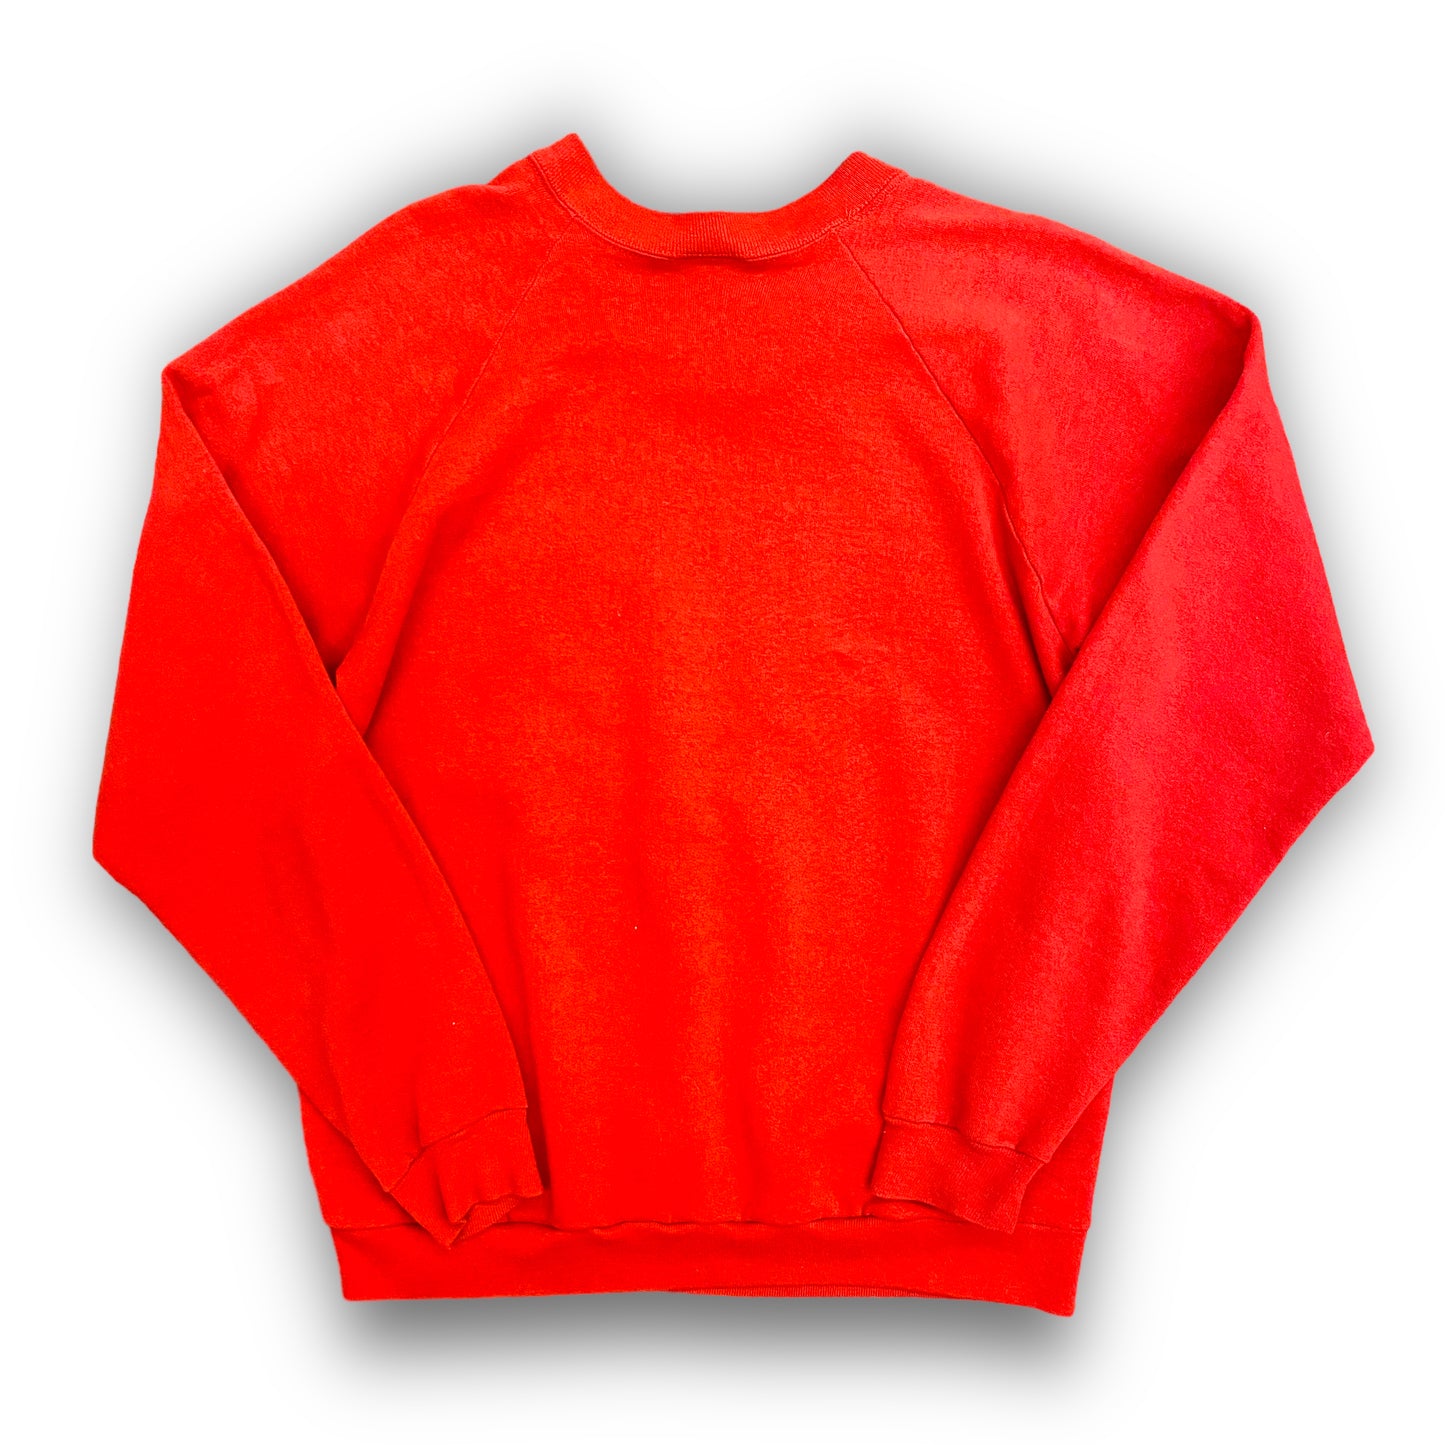 1989 "Smack the Lip" Red BMX Biking Sweatshirt - Size Large